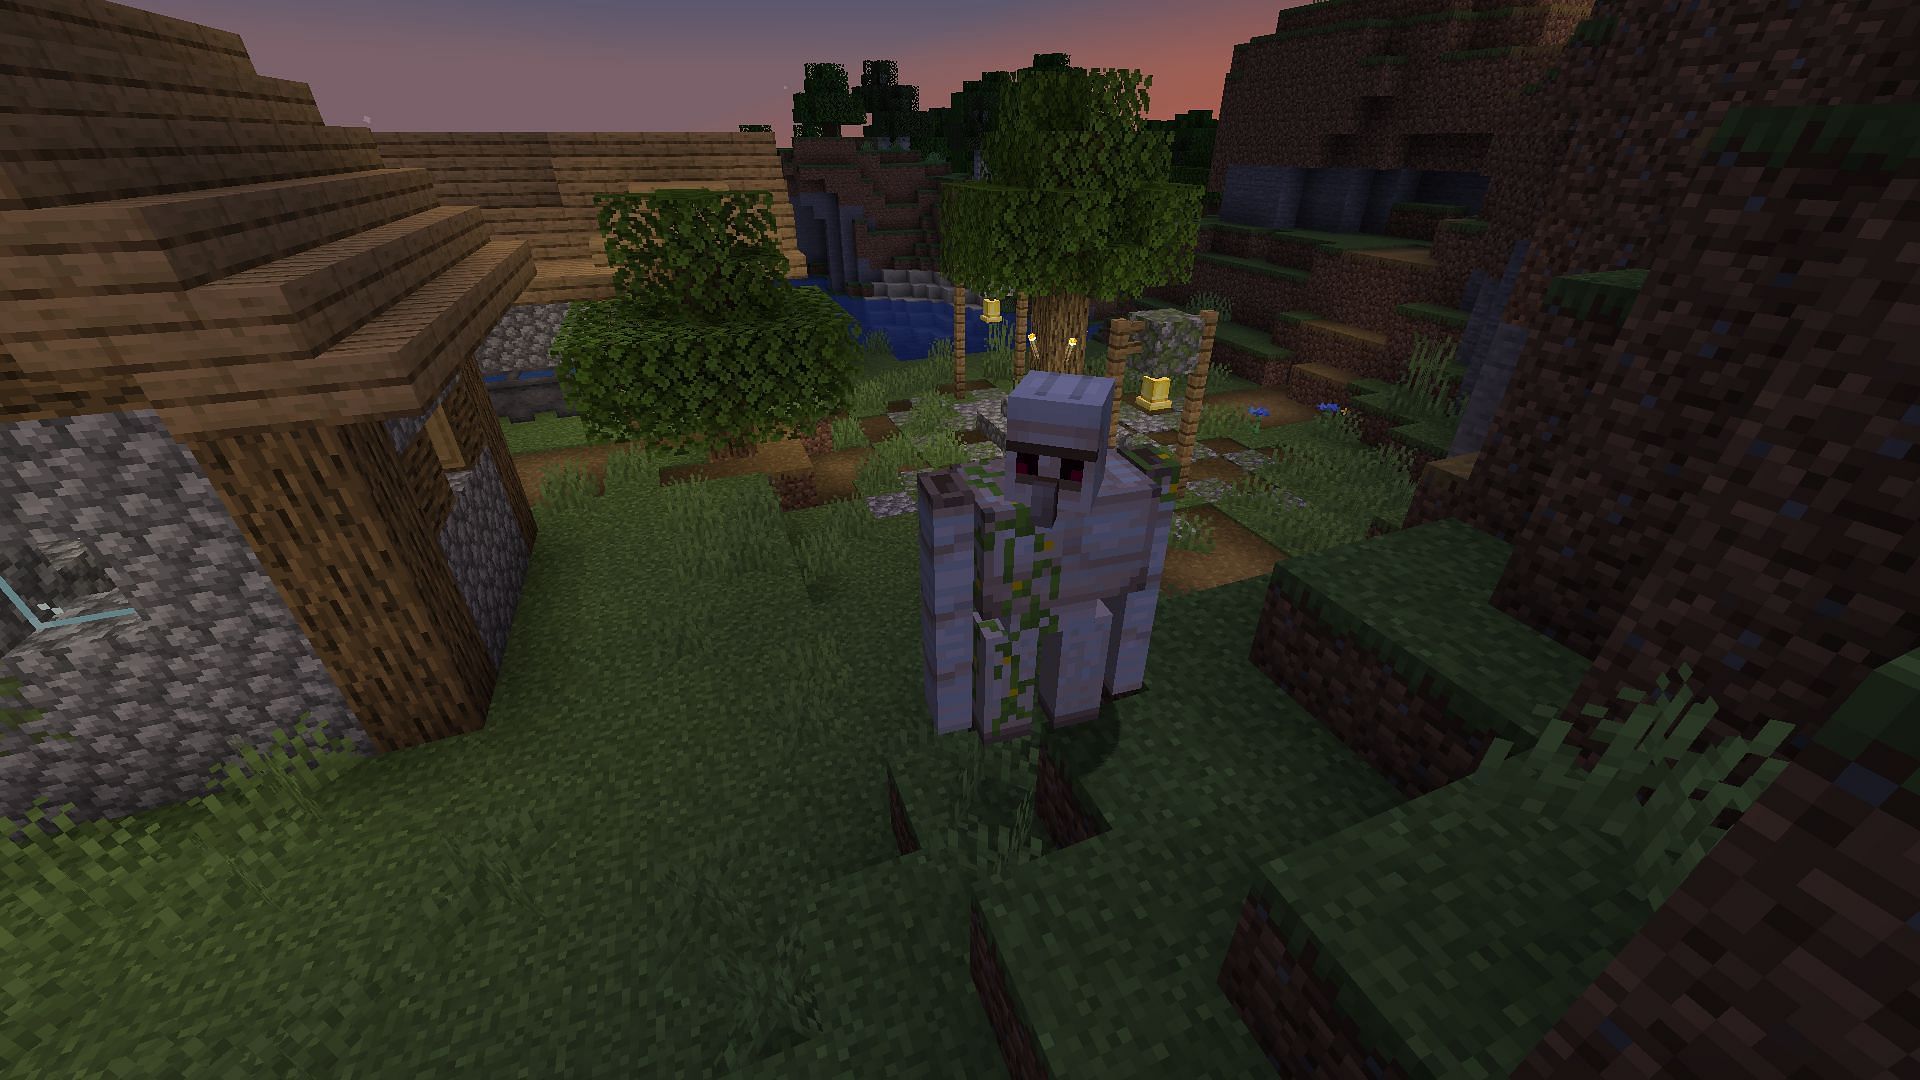 A villager-spawned iron golem protecting a village (Image via Mojang)